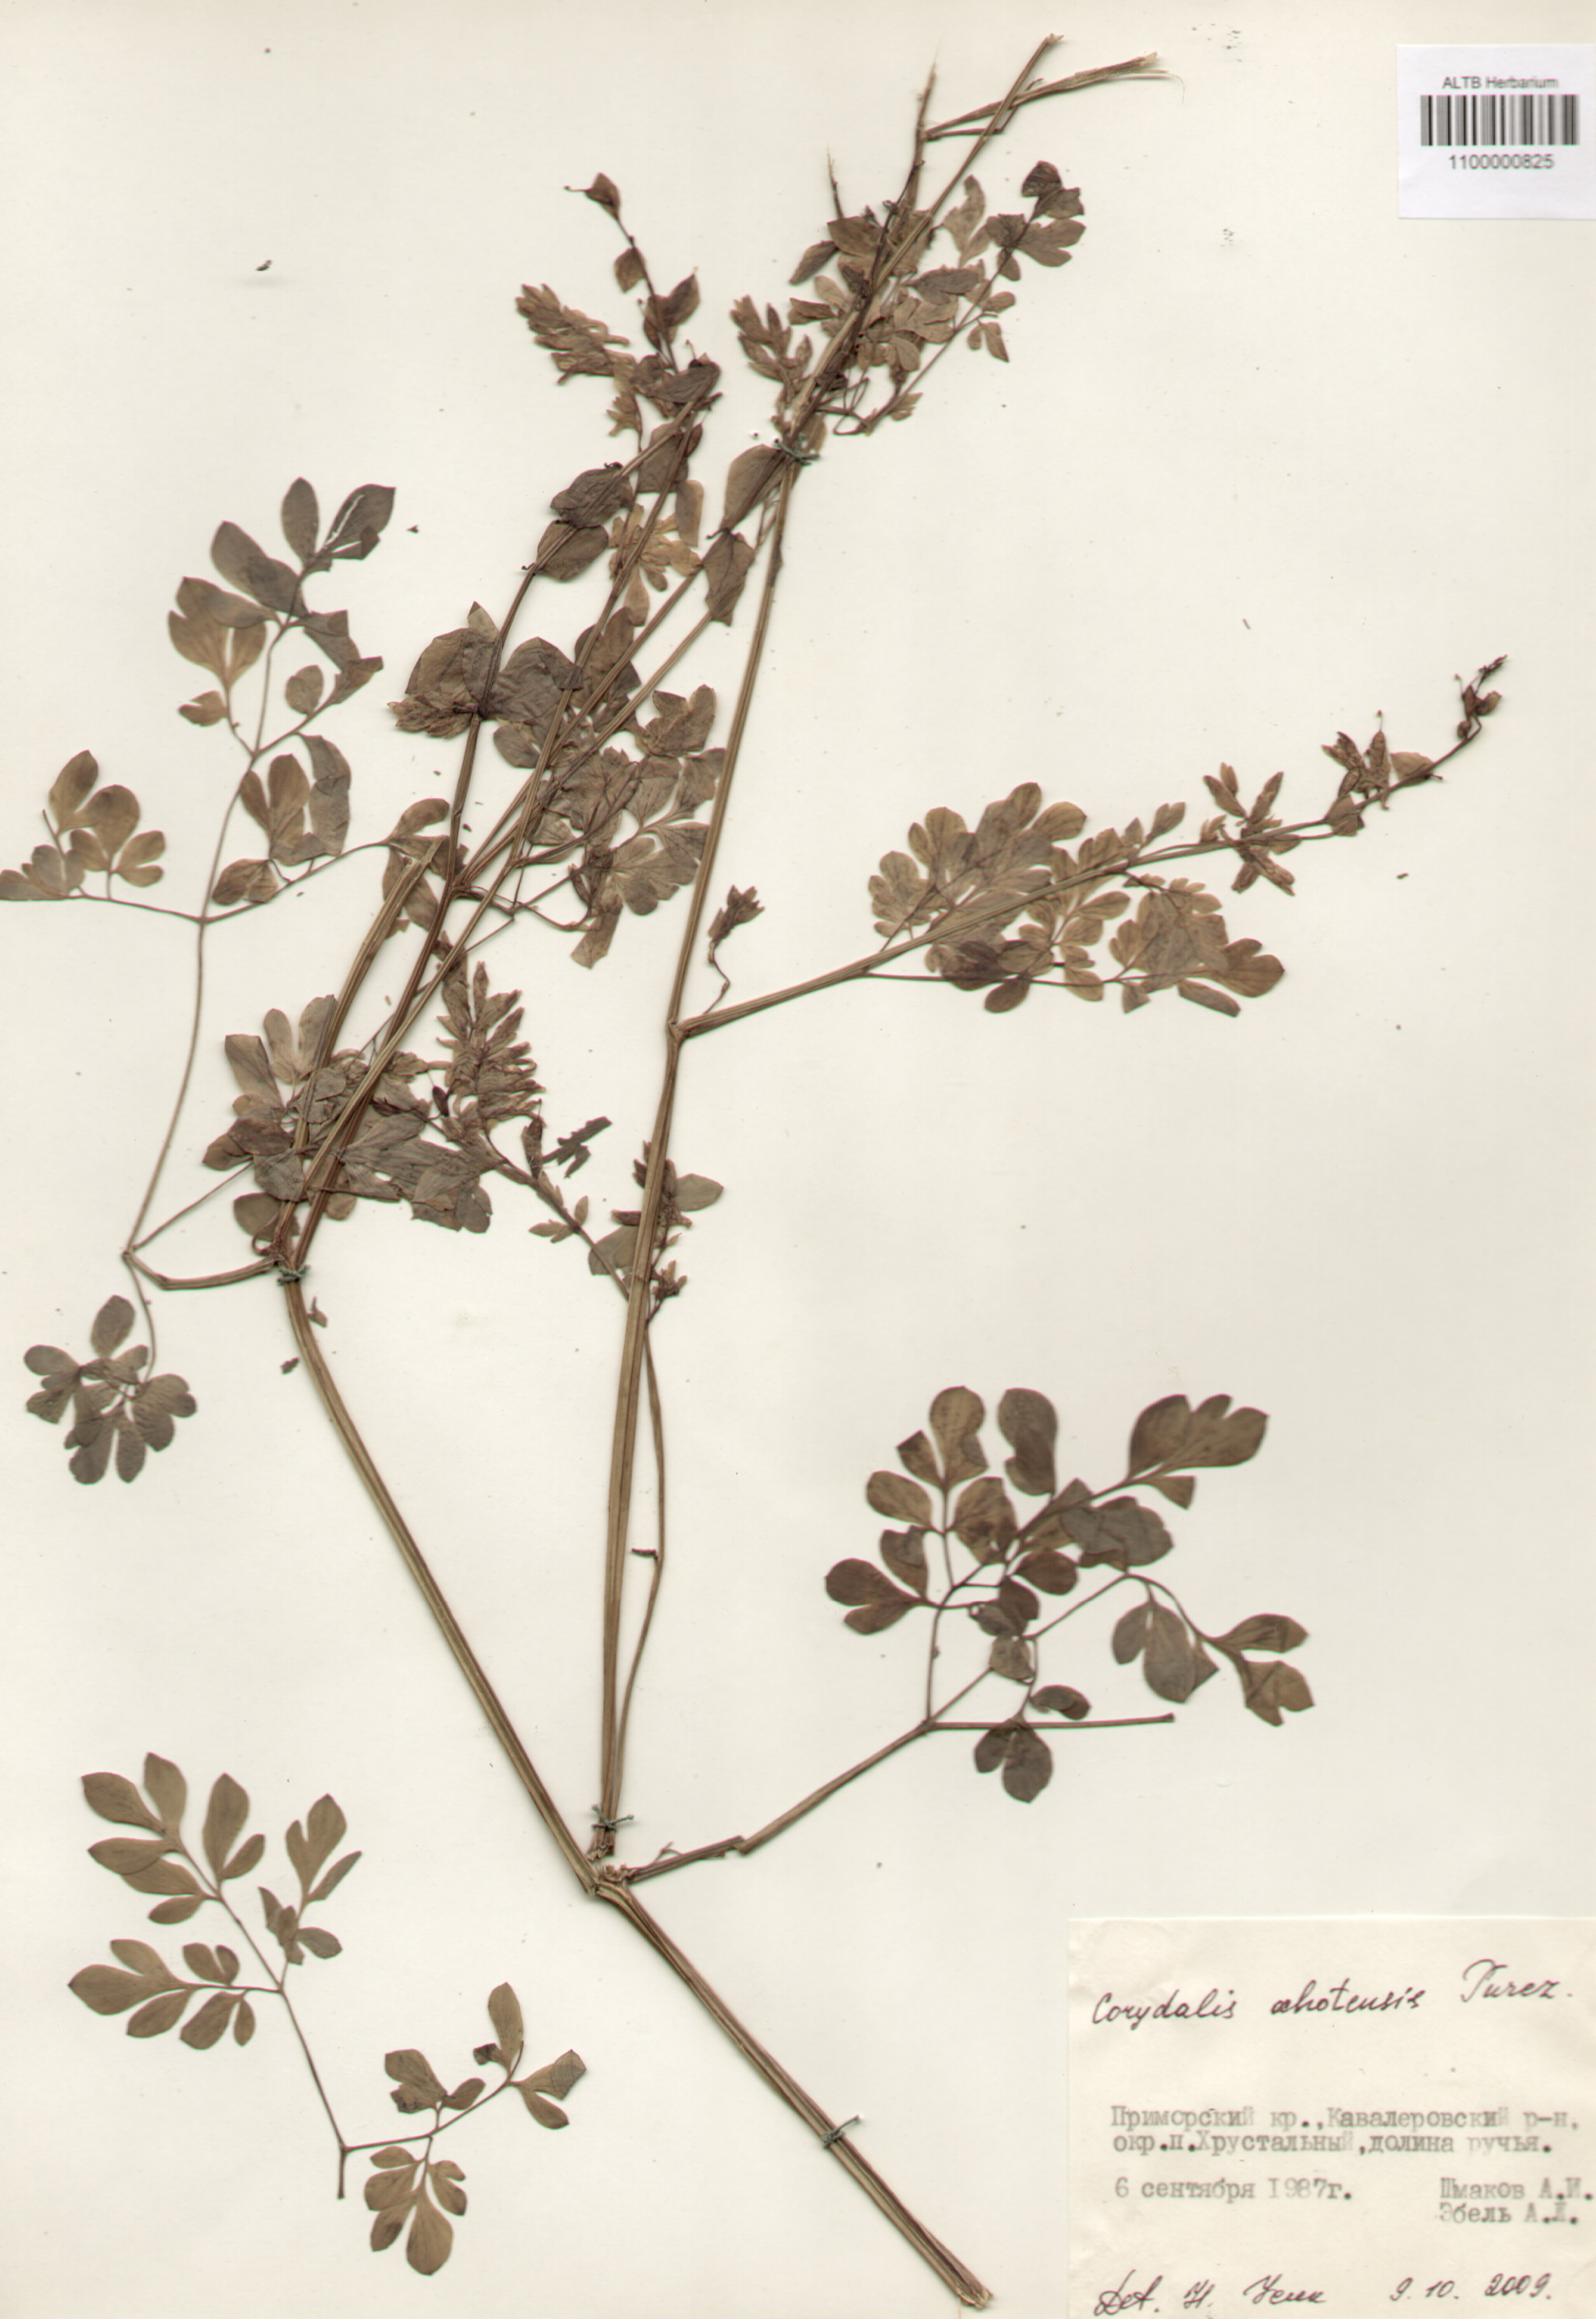 Fumariaceae,Corydalis ochotensis Turcz.